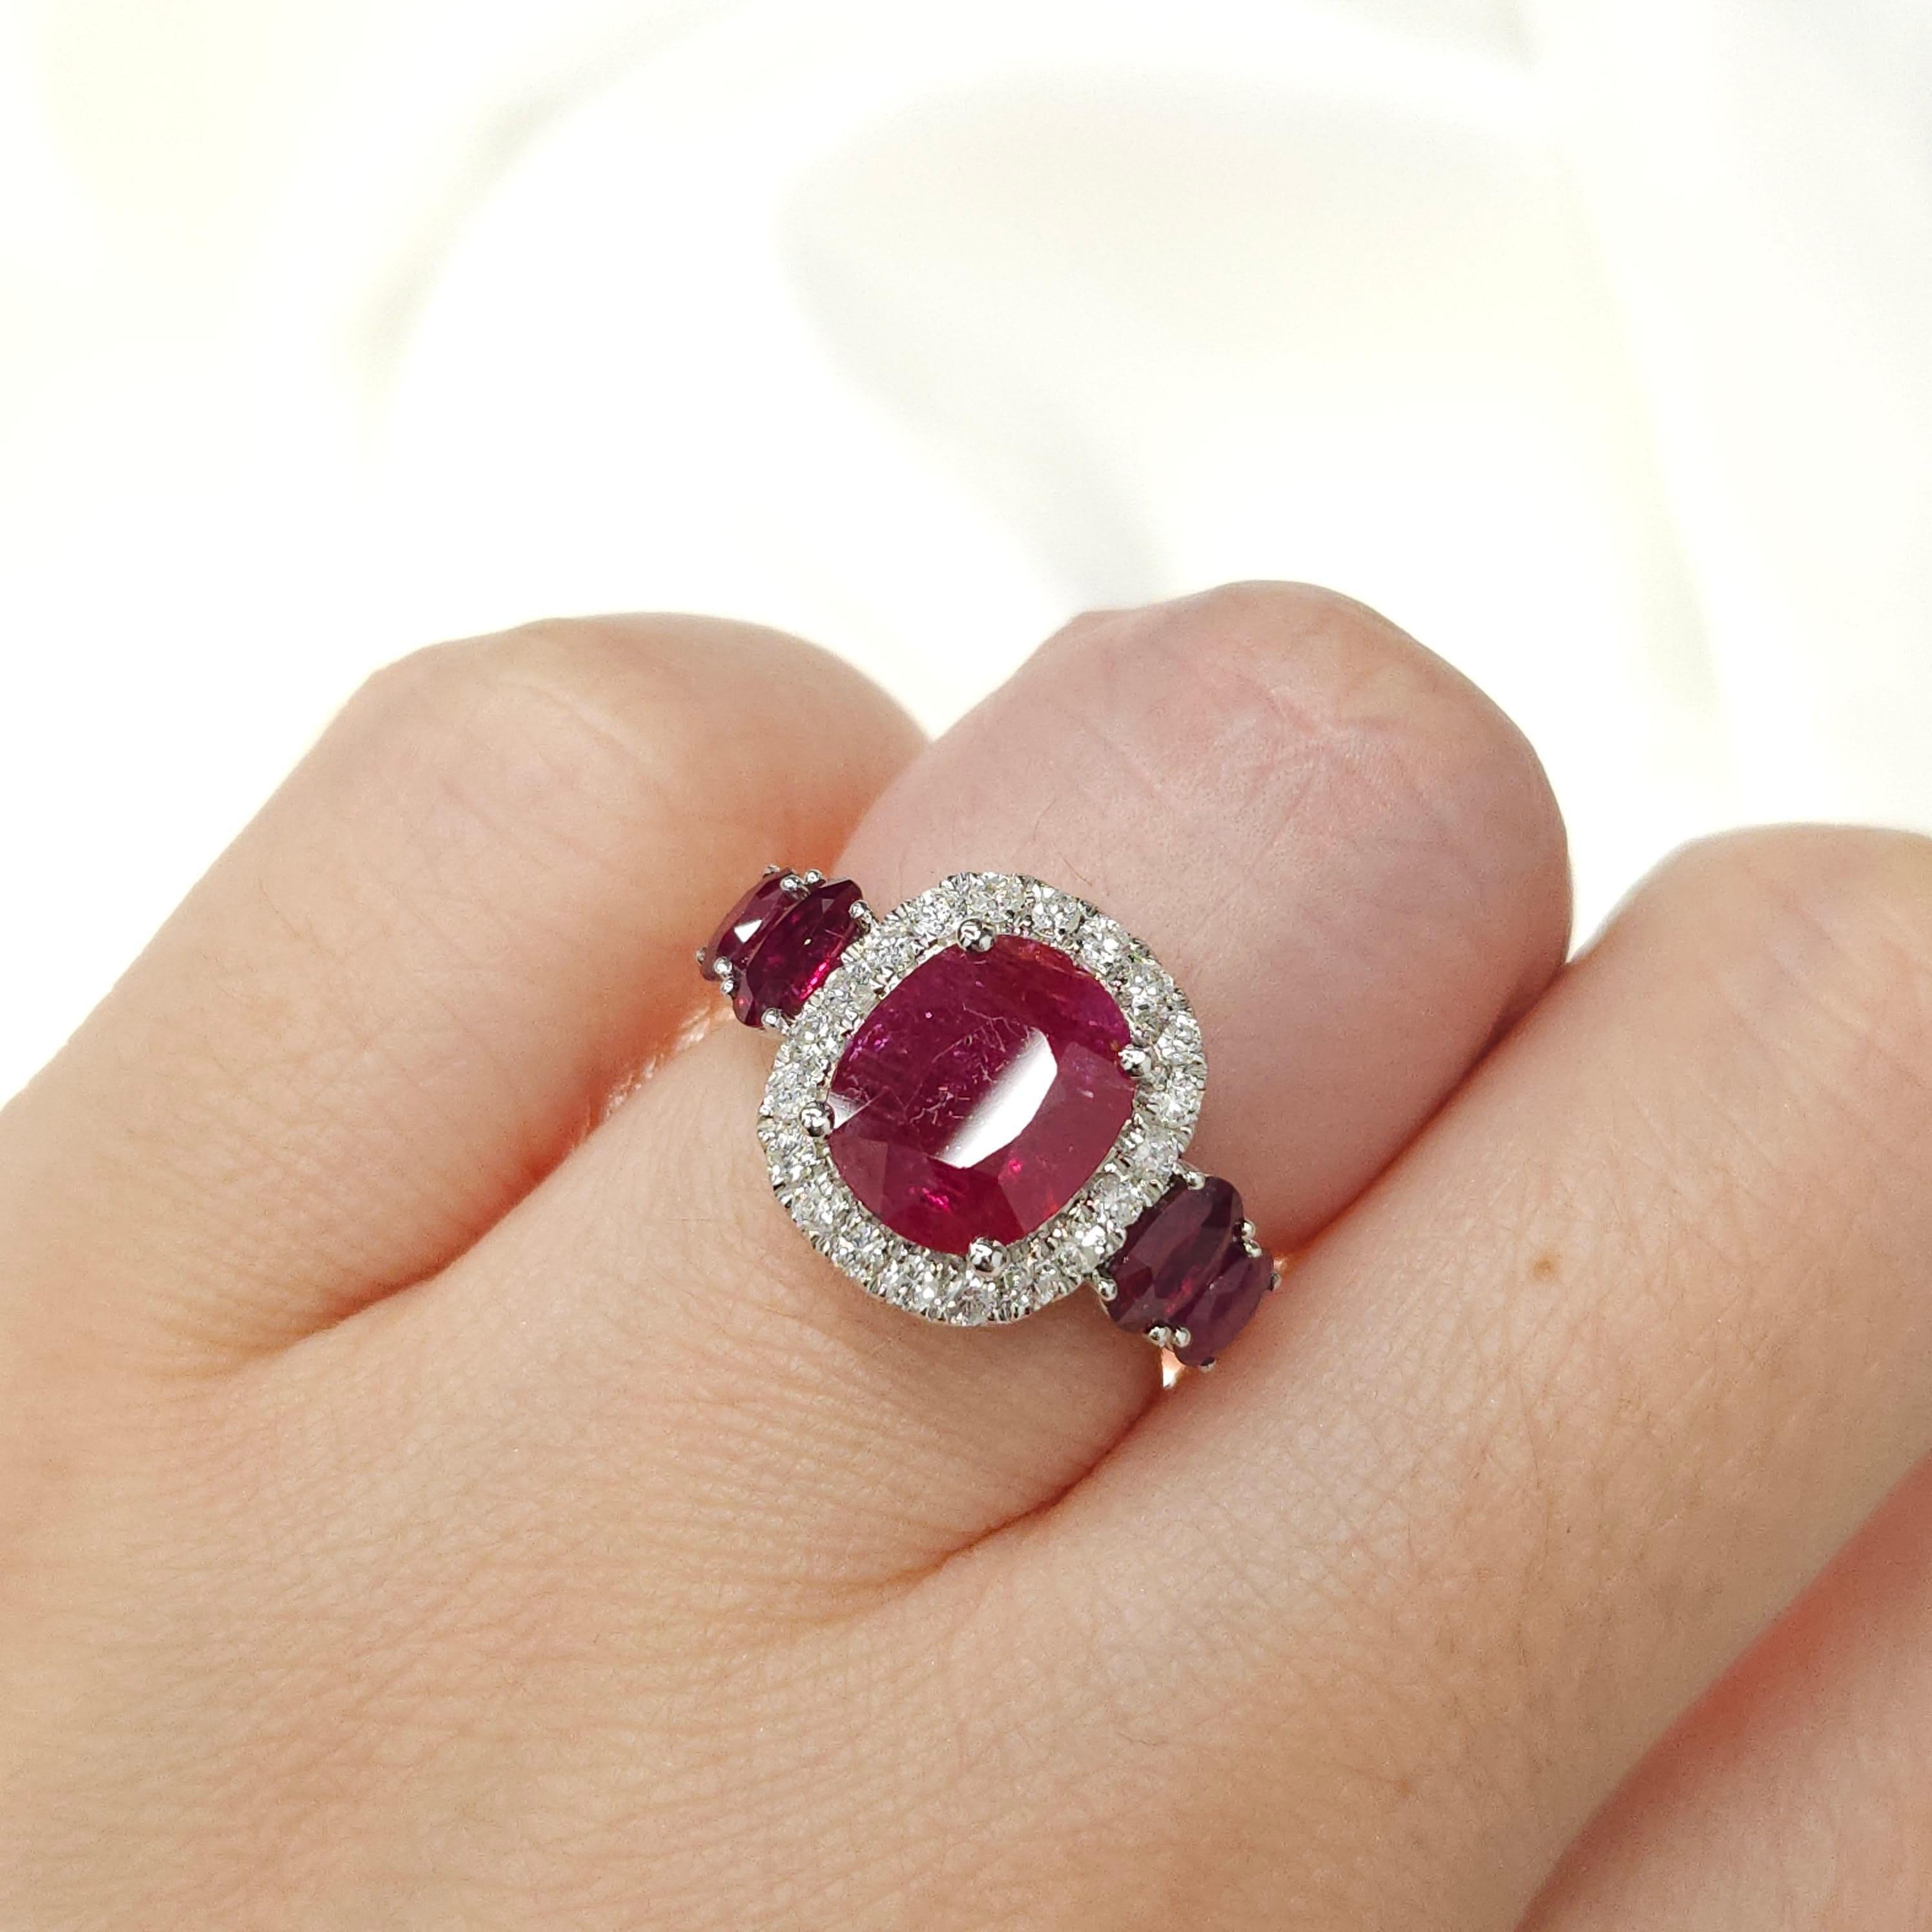 IGI Certified 4.00 Carat Ruby & Diamond Ring in 18K White Gold For Sale 1